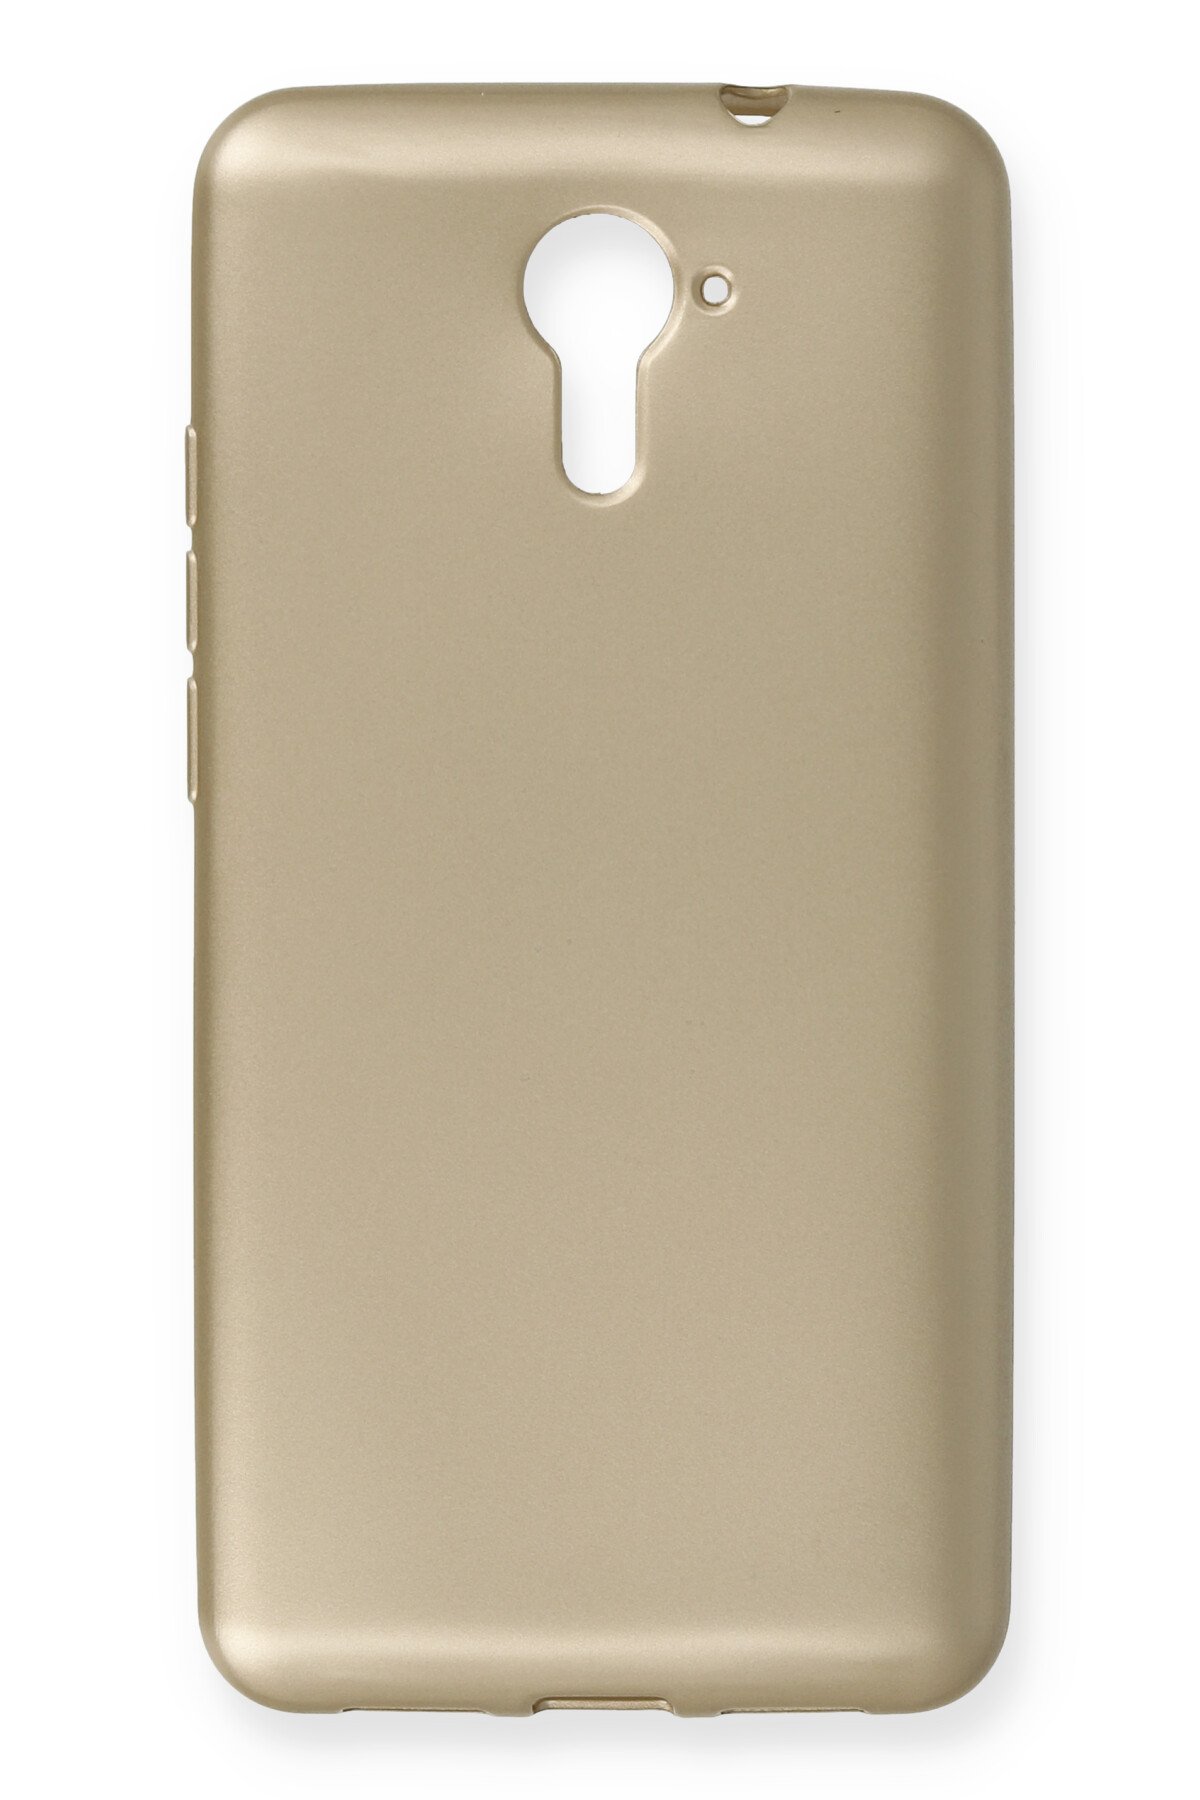 NewFace Newface Casper Via M2 Kılıf Premium Rubber Silikon - Gold